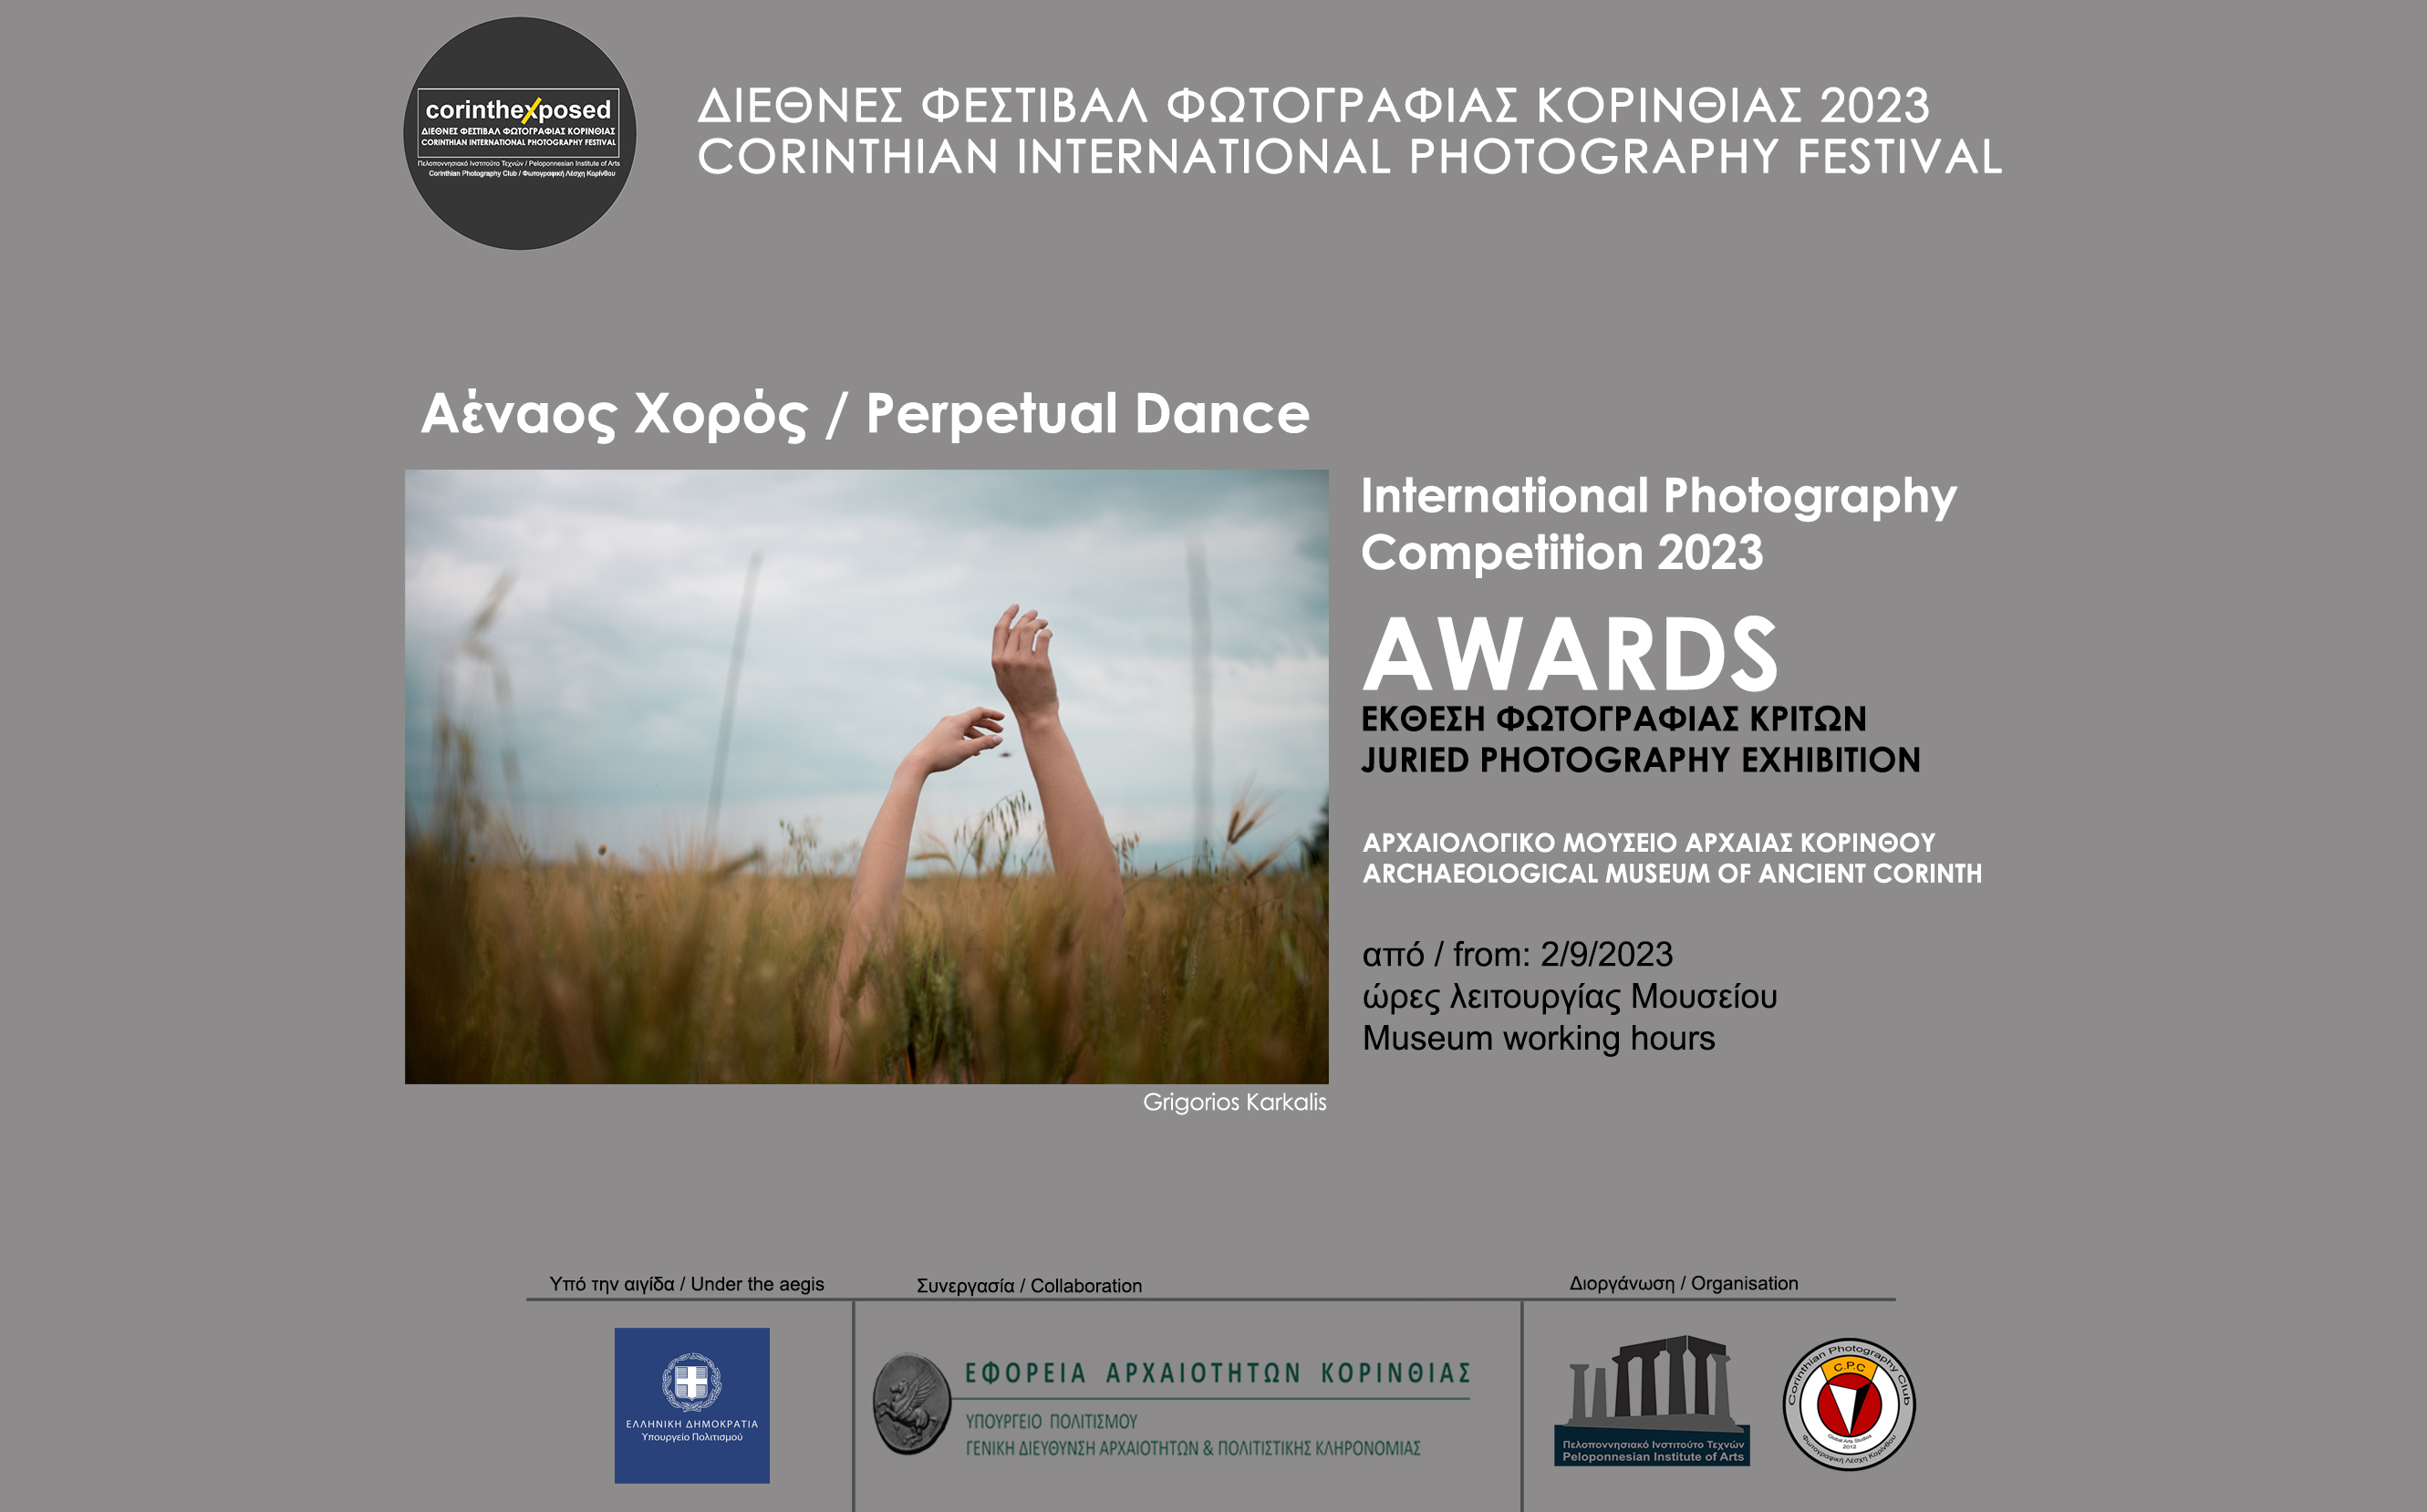 Perpetual dance awarded photos exhibition